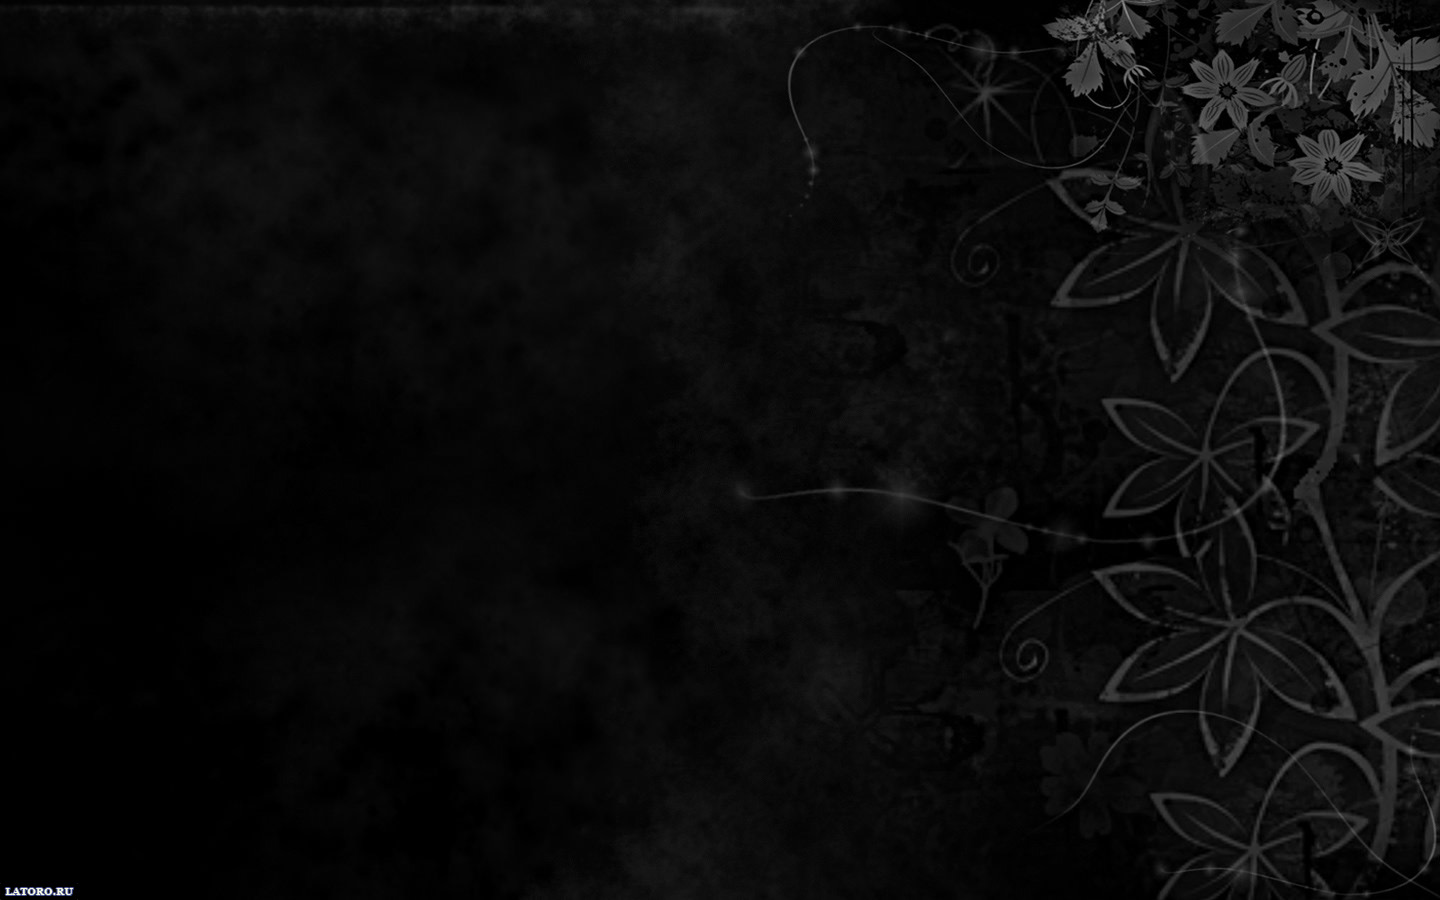 Black and White Desktop Wallpapers FREE on Latorocom 1440x900